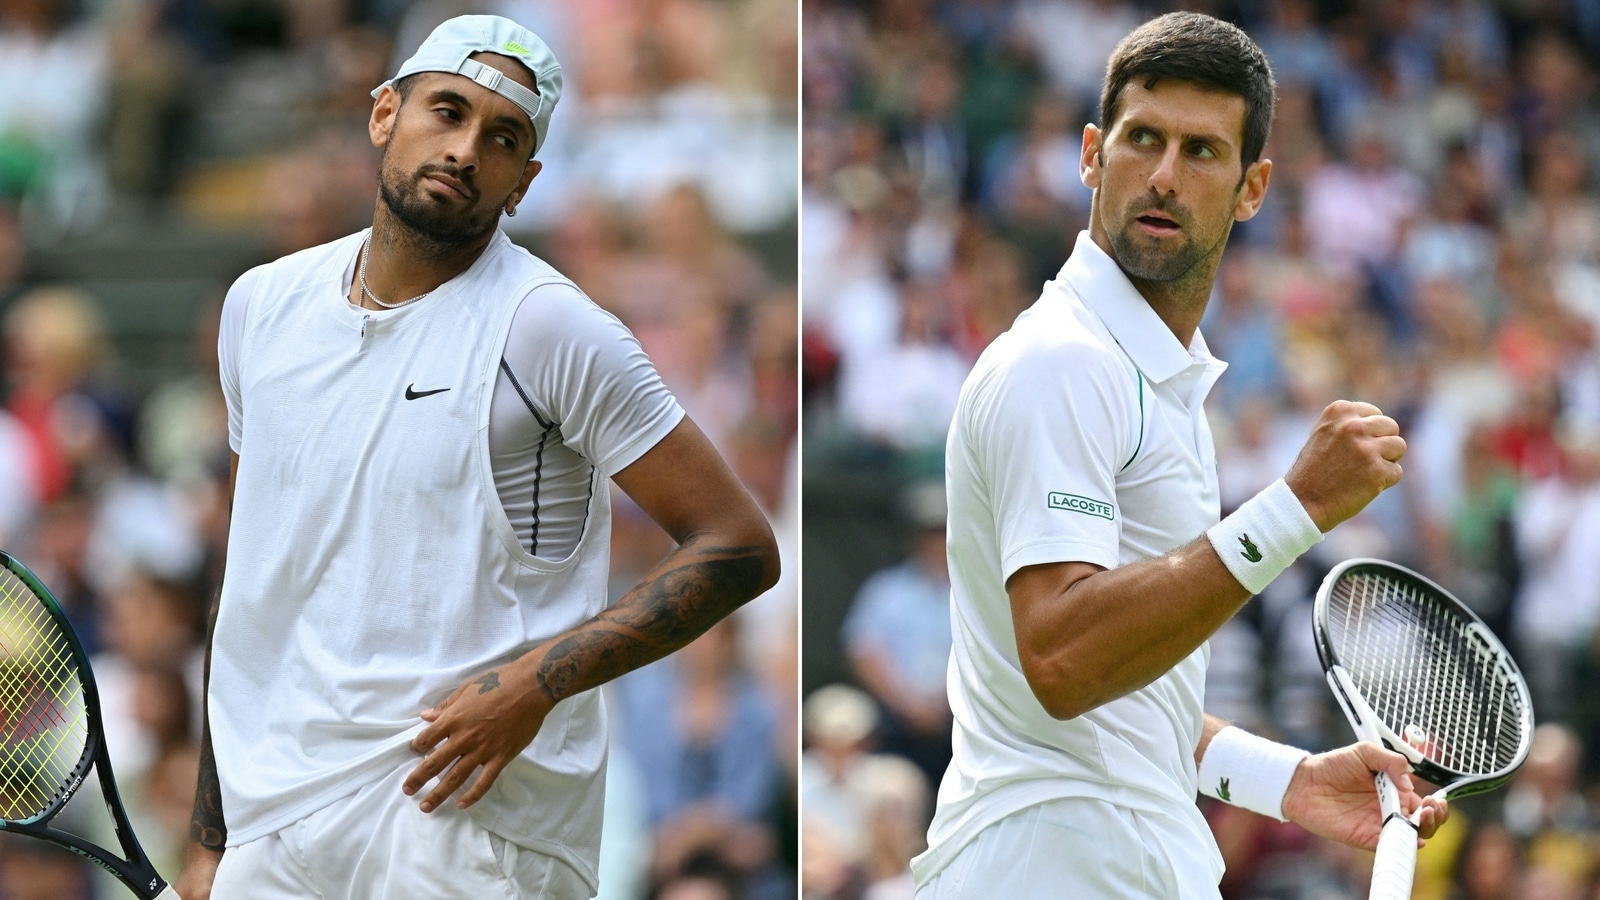 ‘Let’s go to a nightclub and go nuts’: Novak Djokovic, Nick Kyrgios bromance takes off ahead of Wimbledon showdown